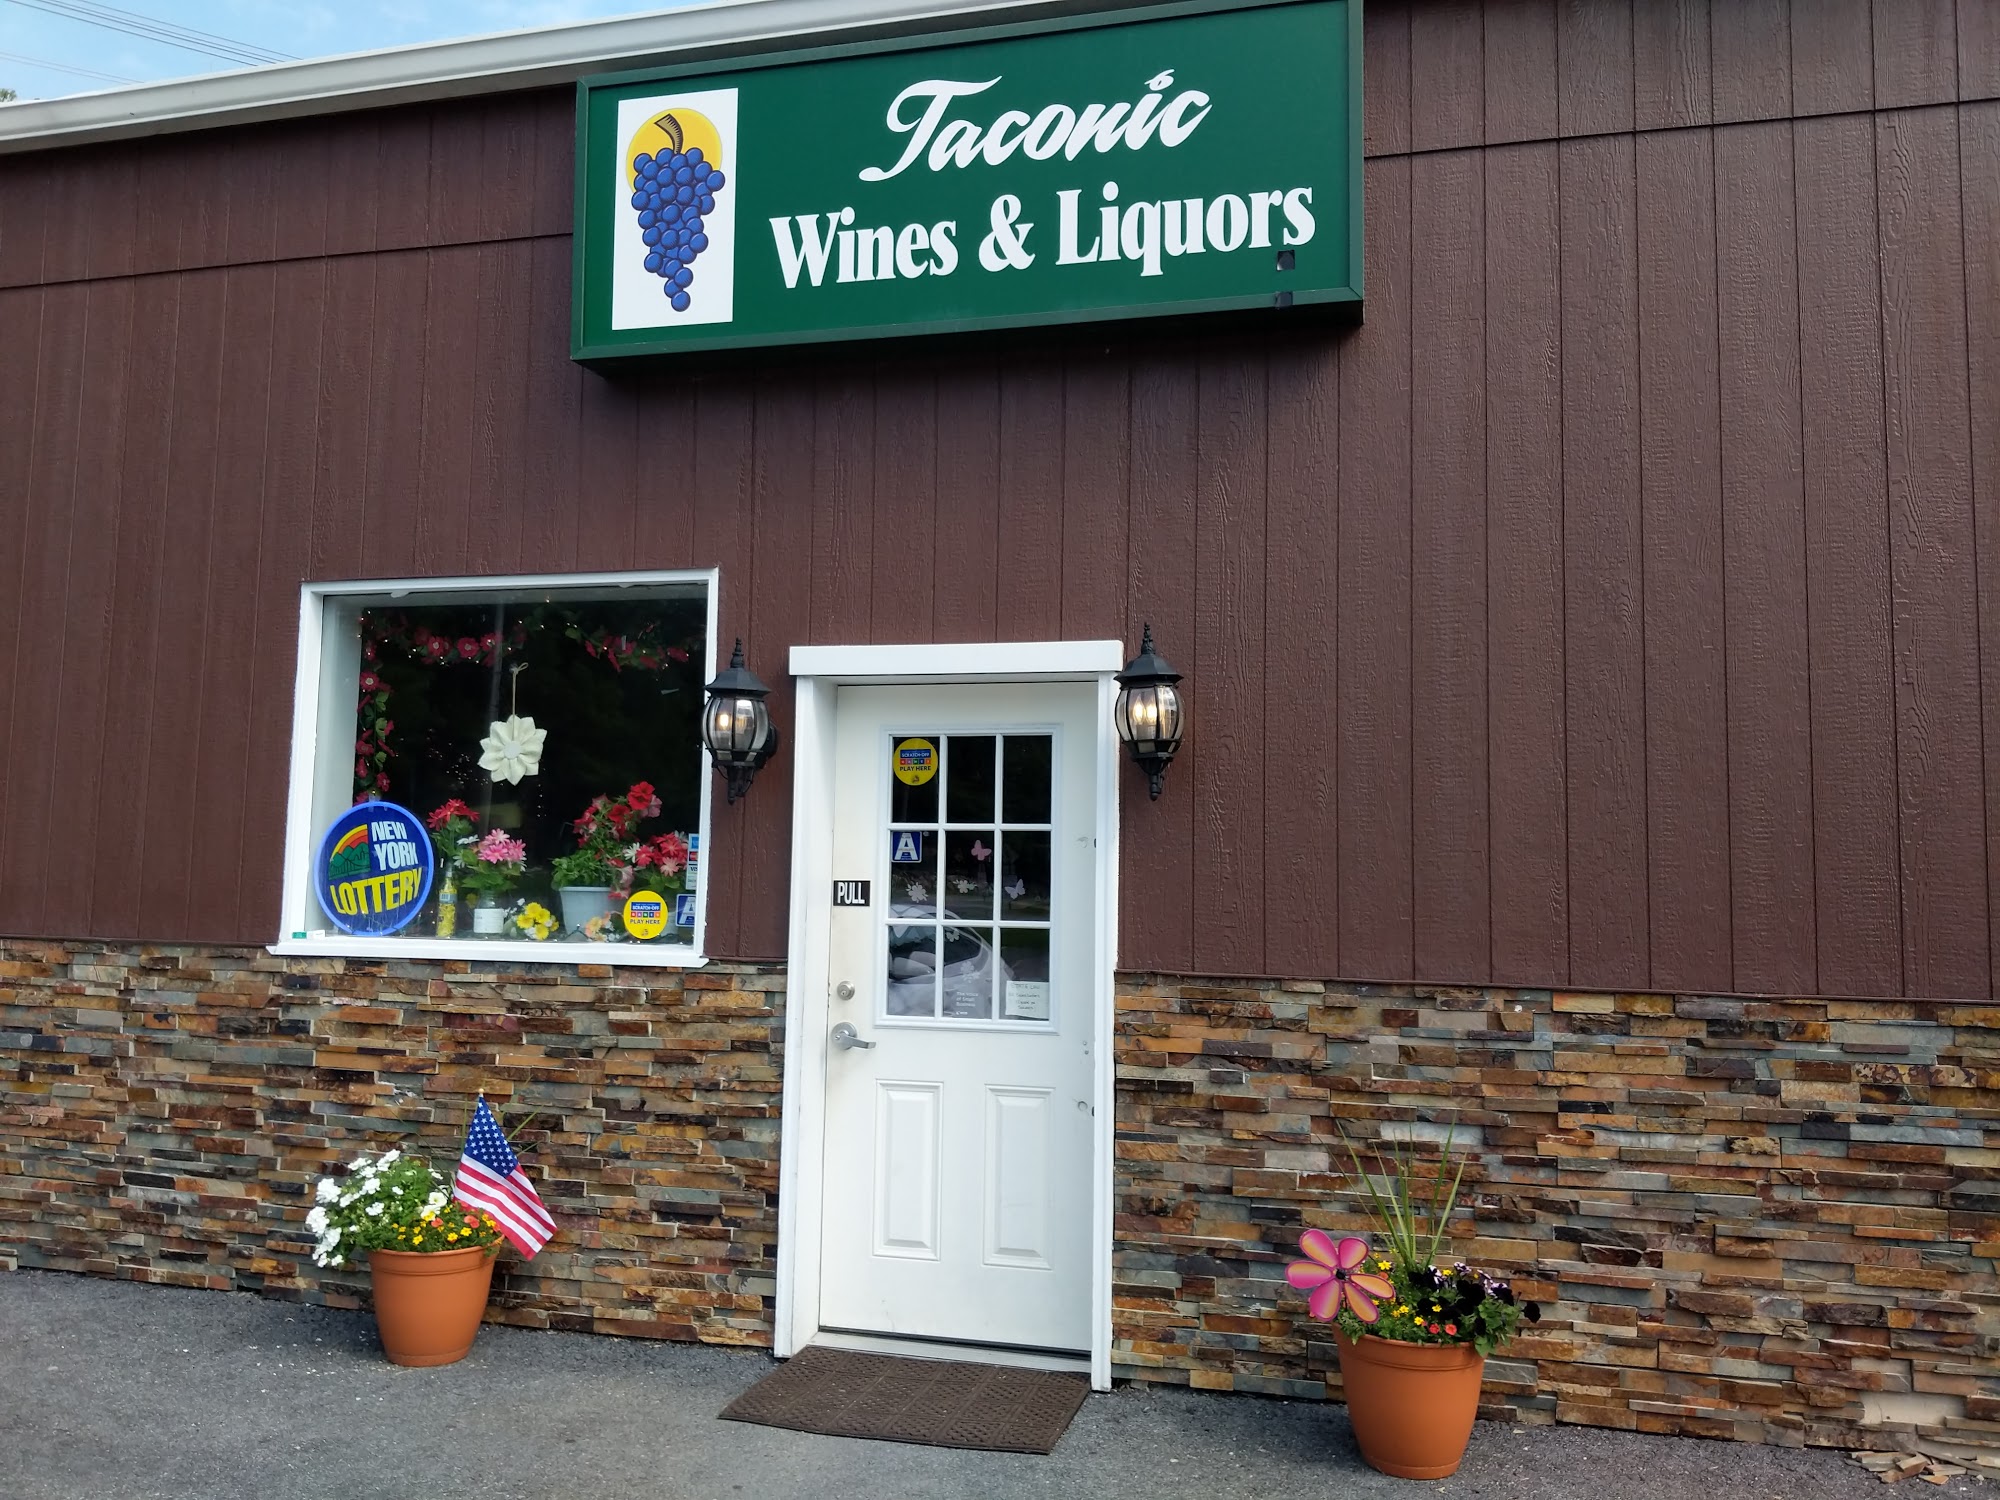 Taconic Wines & Liquors